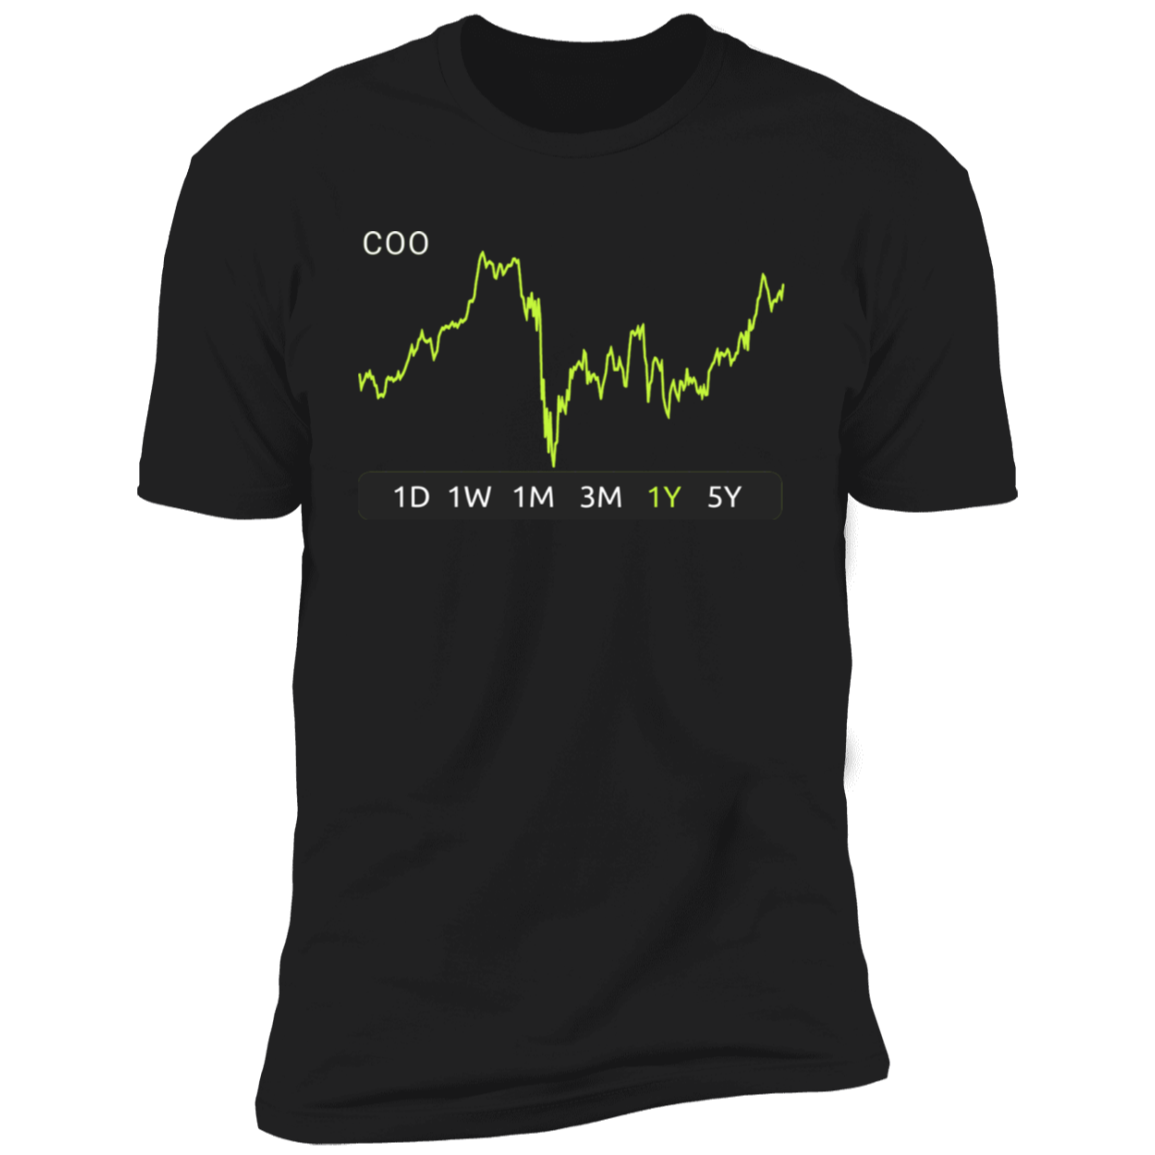 COO Stock 1y Premium T-Shirt